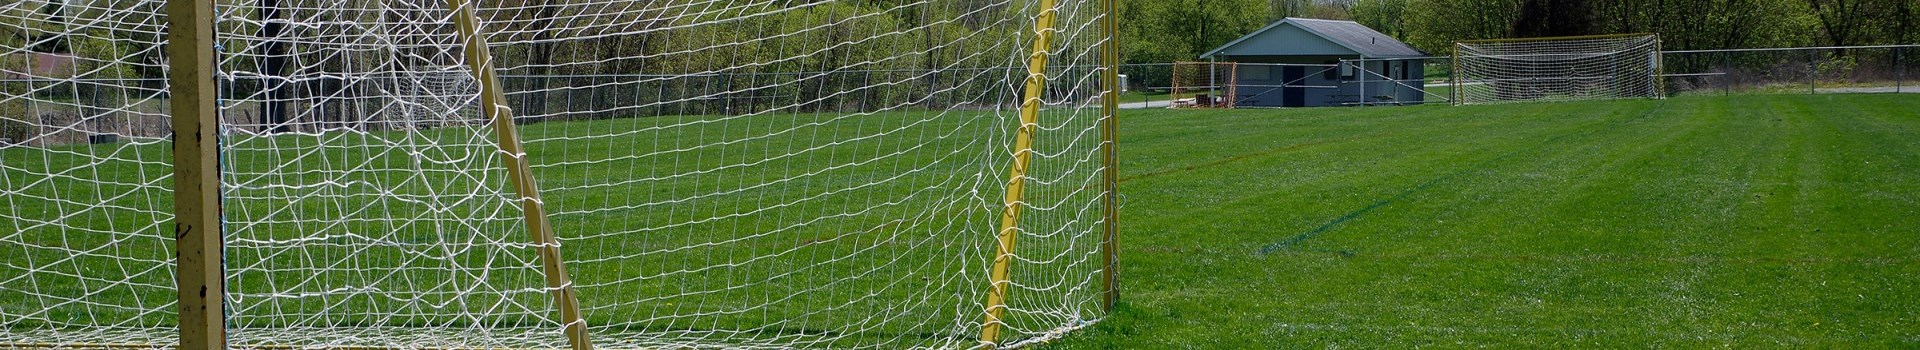 Soccer nets at Gerald Ball Memorial Park